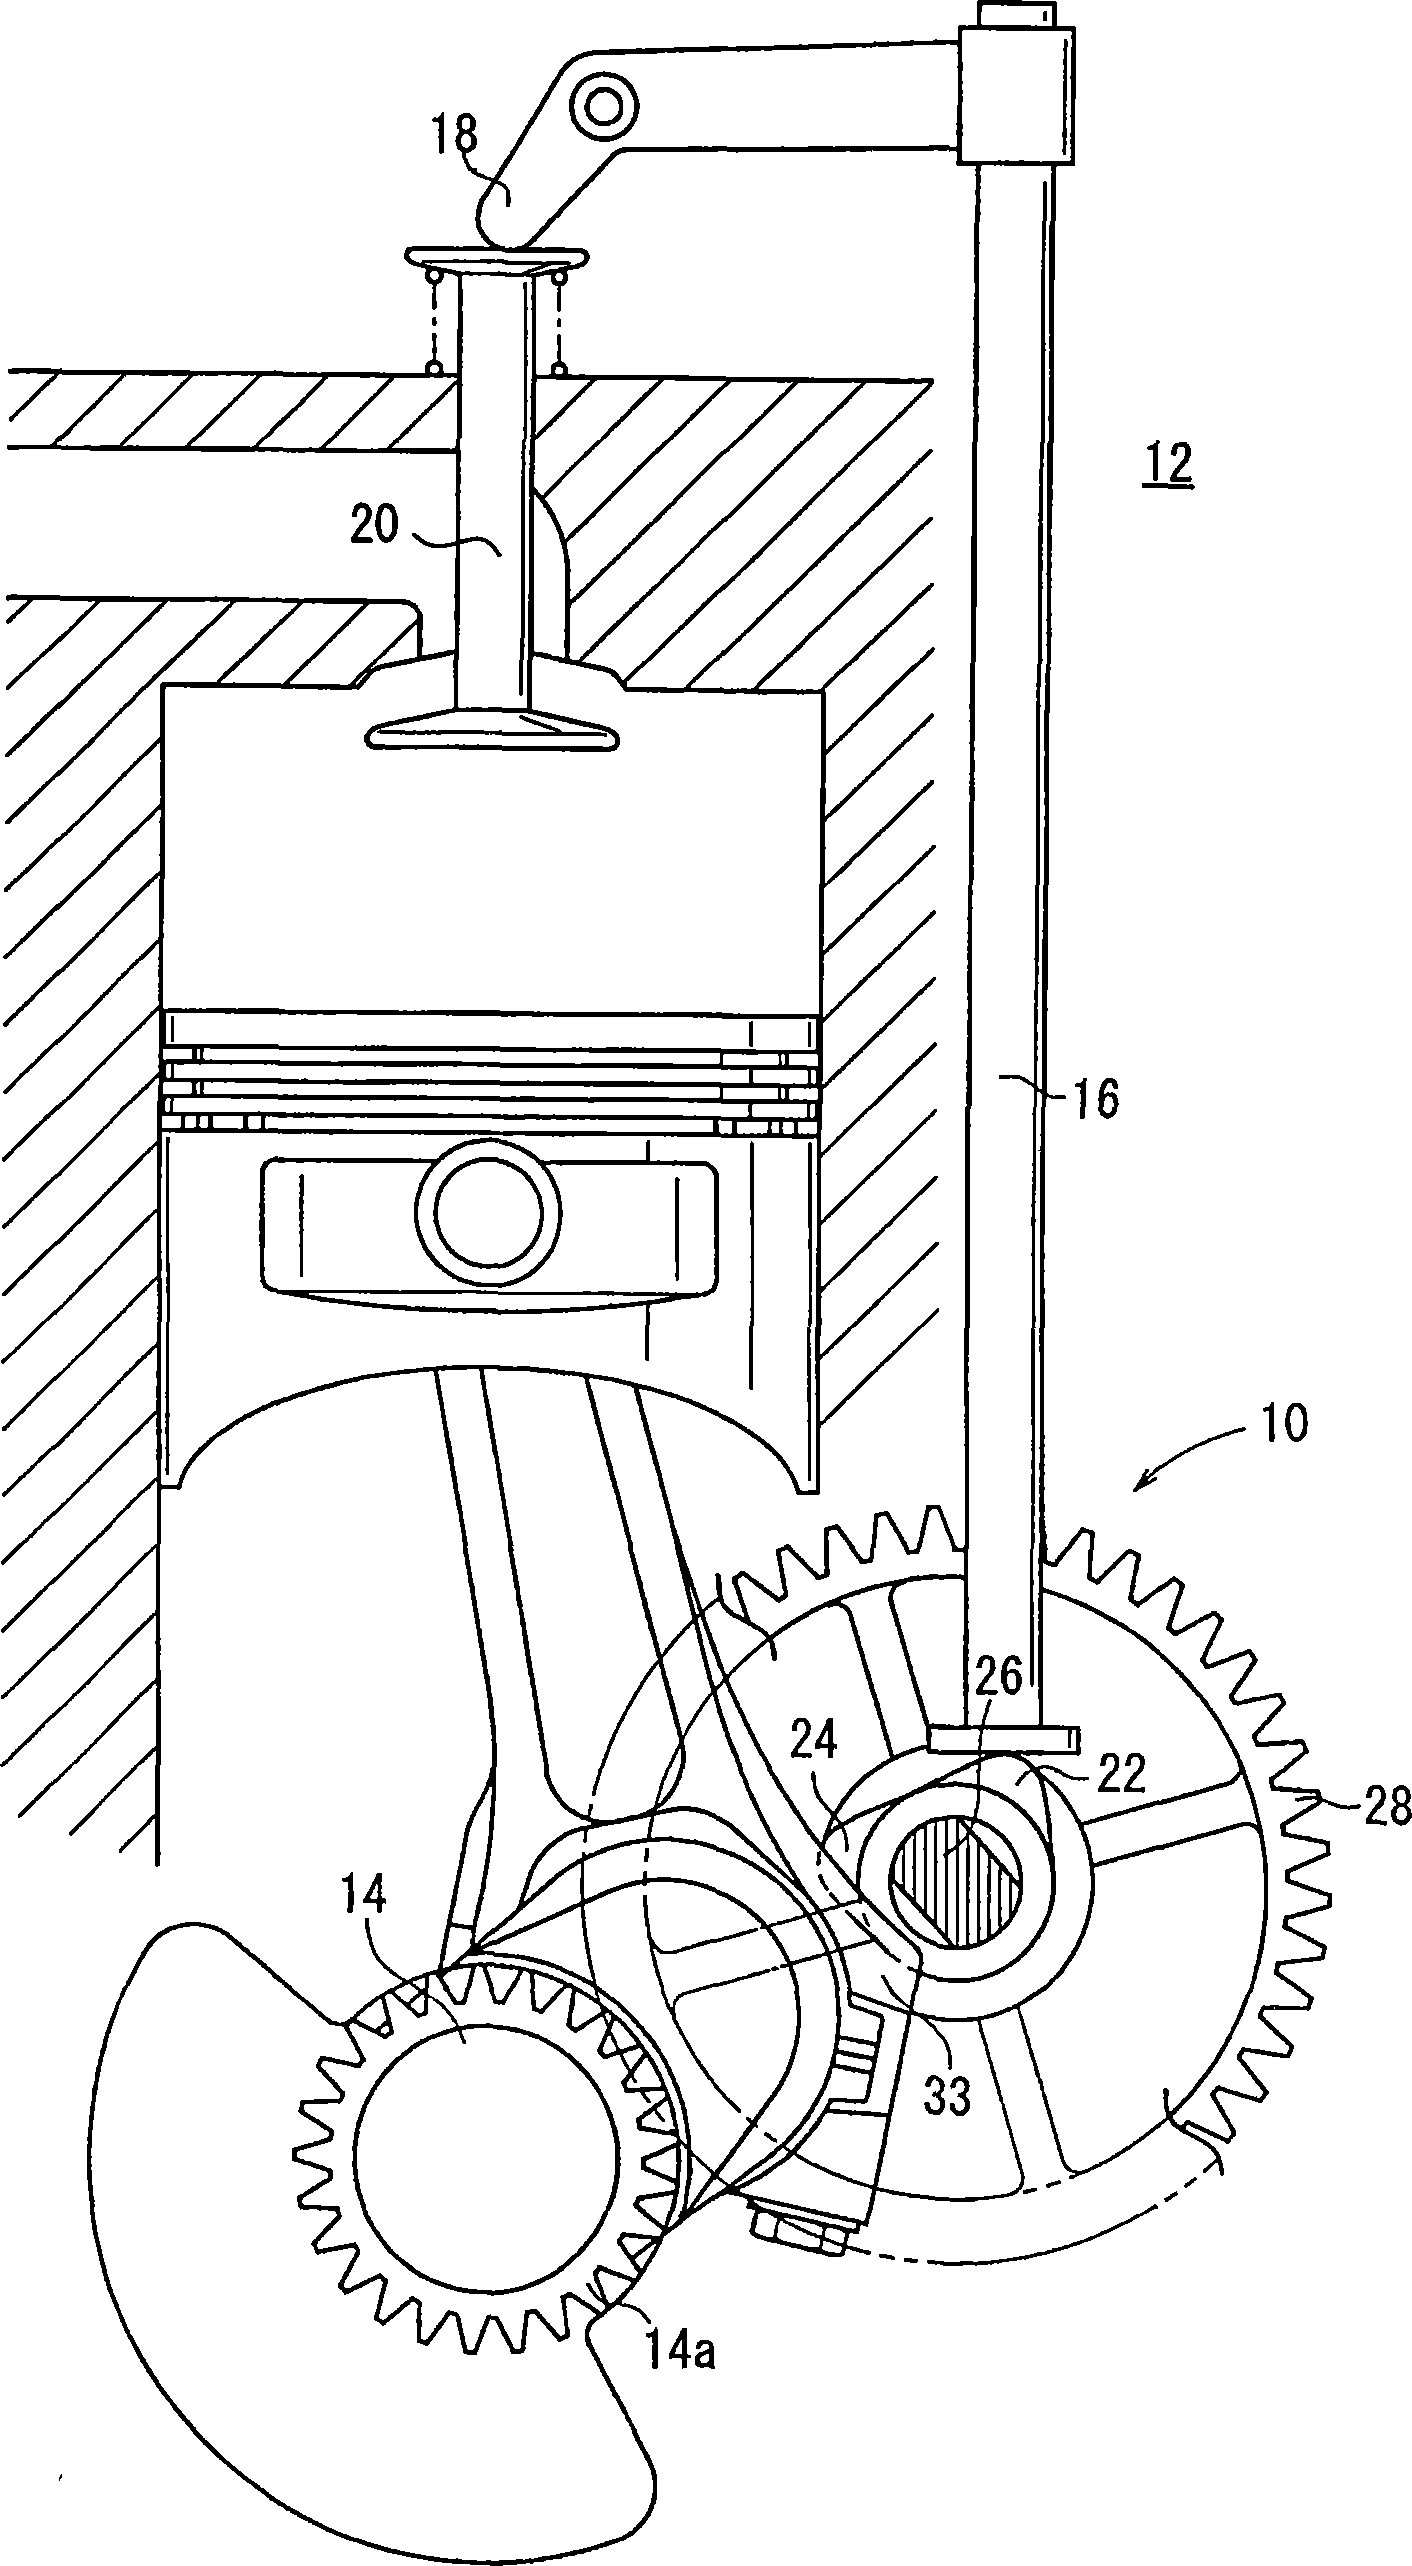 Camshaft, method of manufacturing cam for camshaft, and method of manufacturing shaft for camshaft